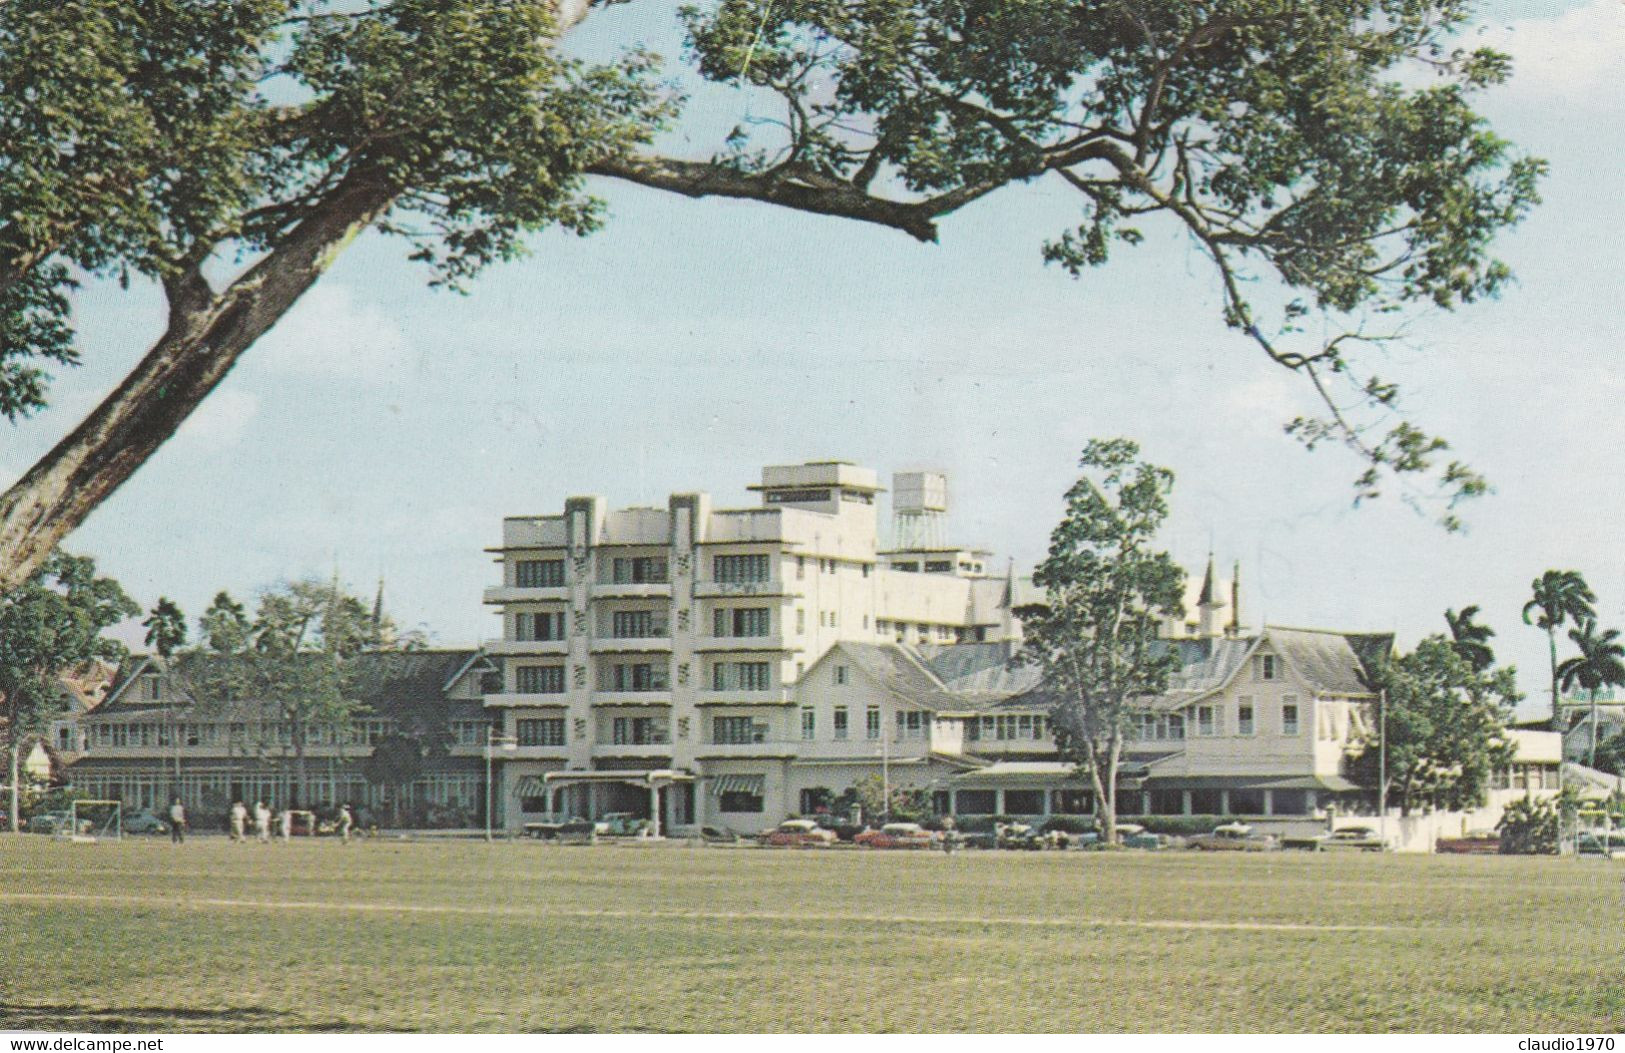 TRINIDAD - CARTOLINA - QUEEN' S PARK HOTEK - VIAGGIATA PER  TRAPANI -ITALIA - 1969 - Trinidad